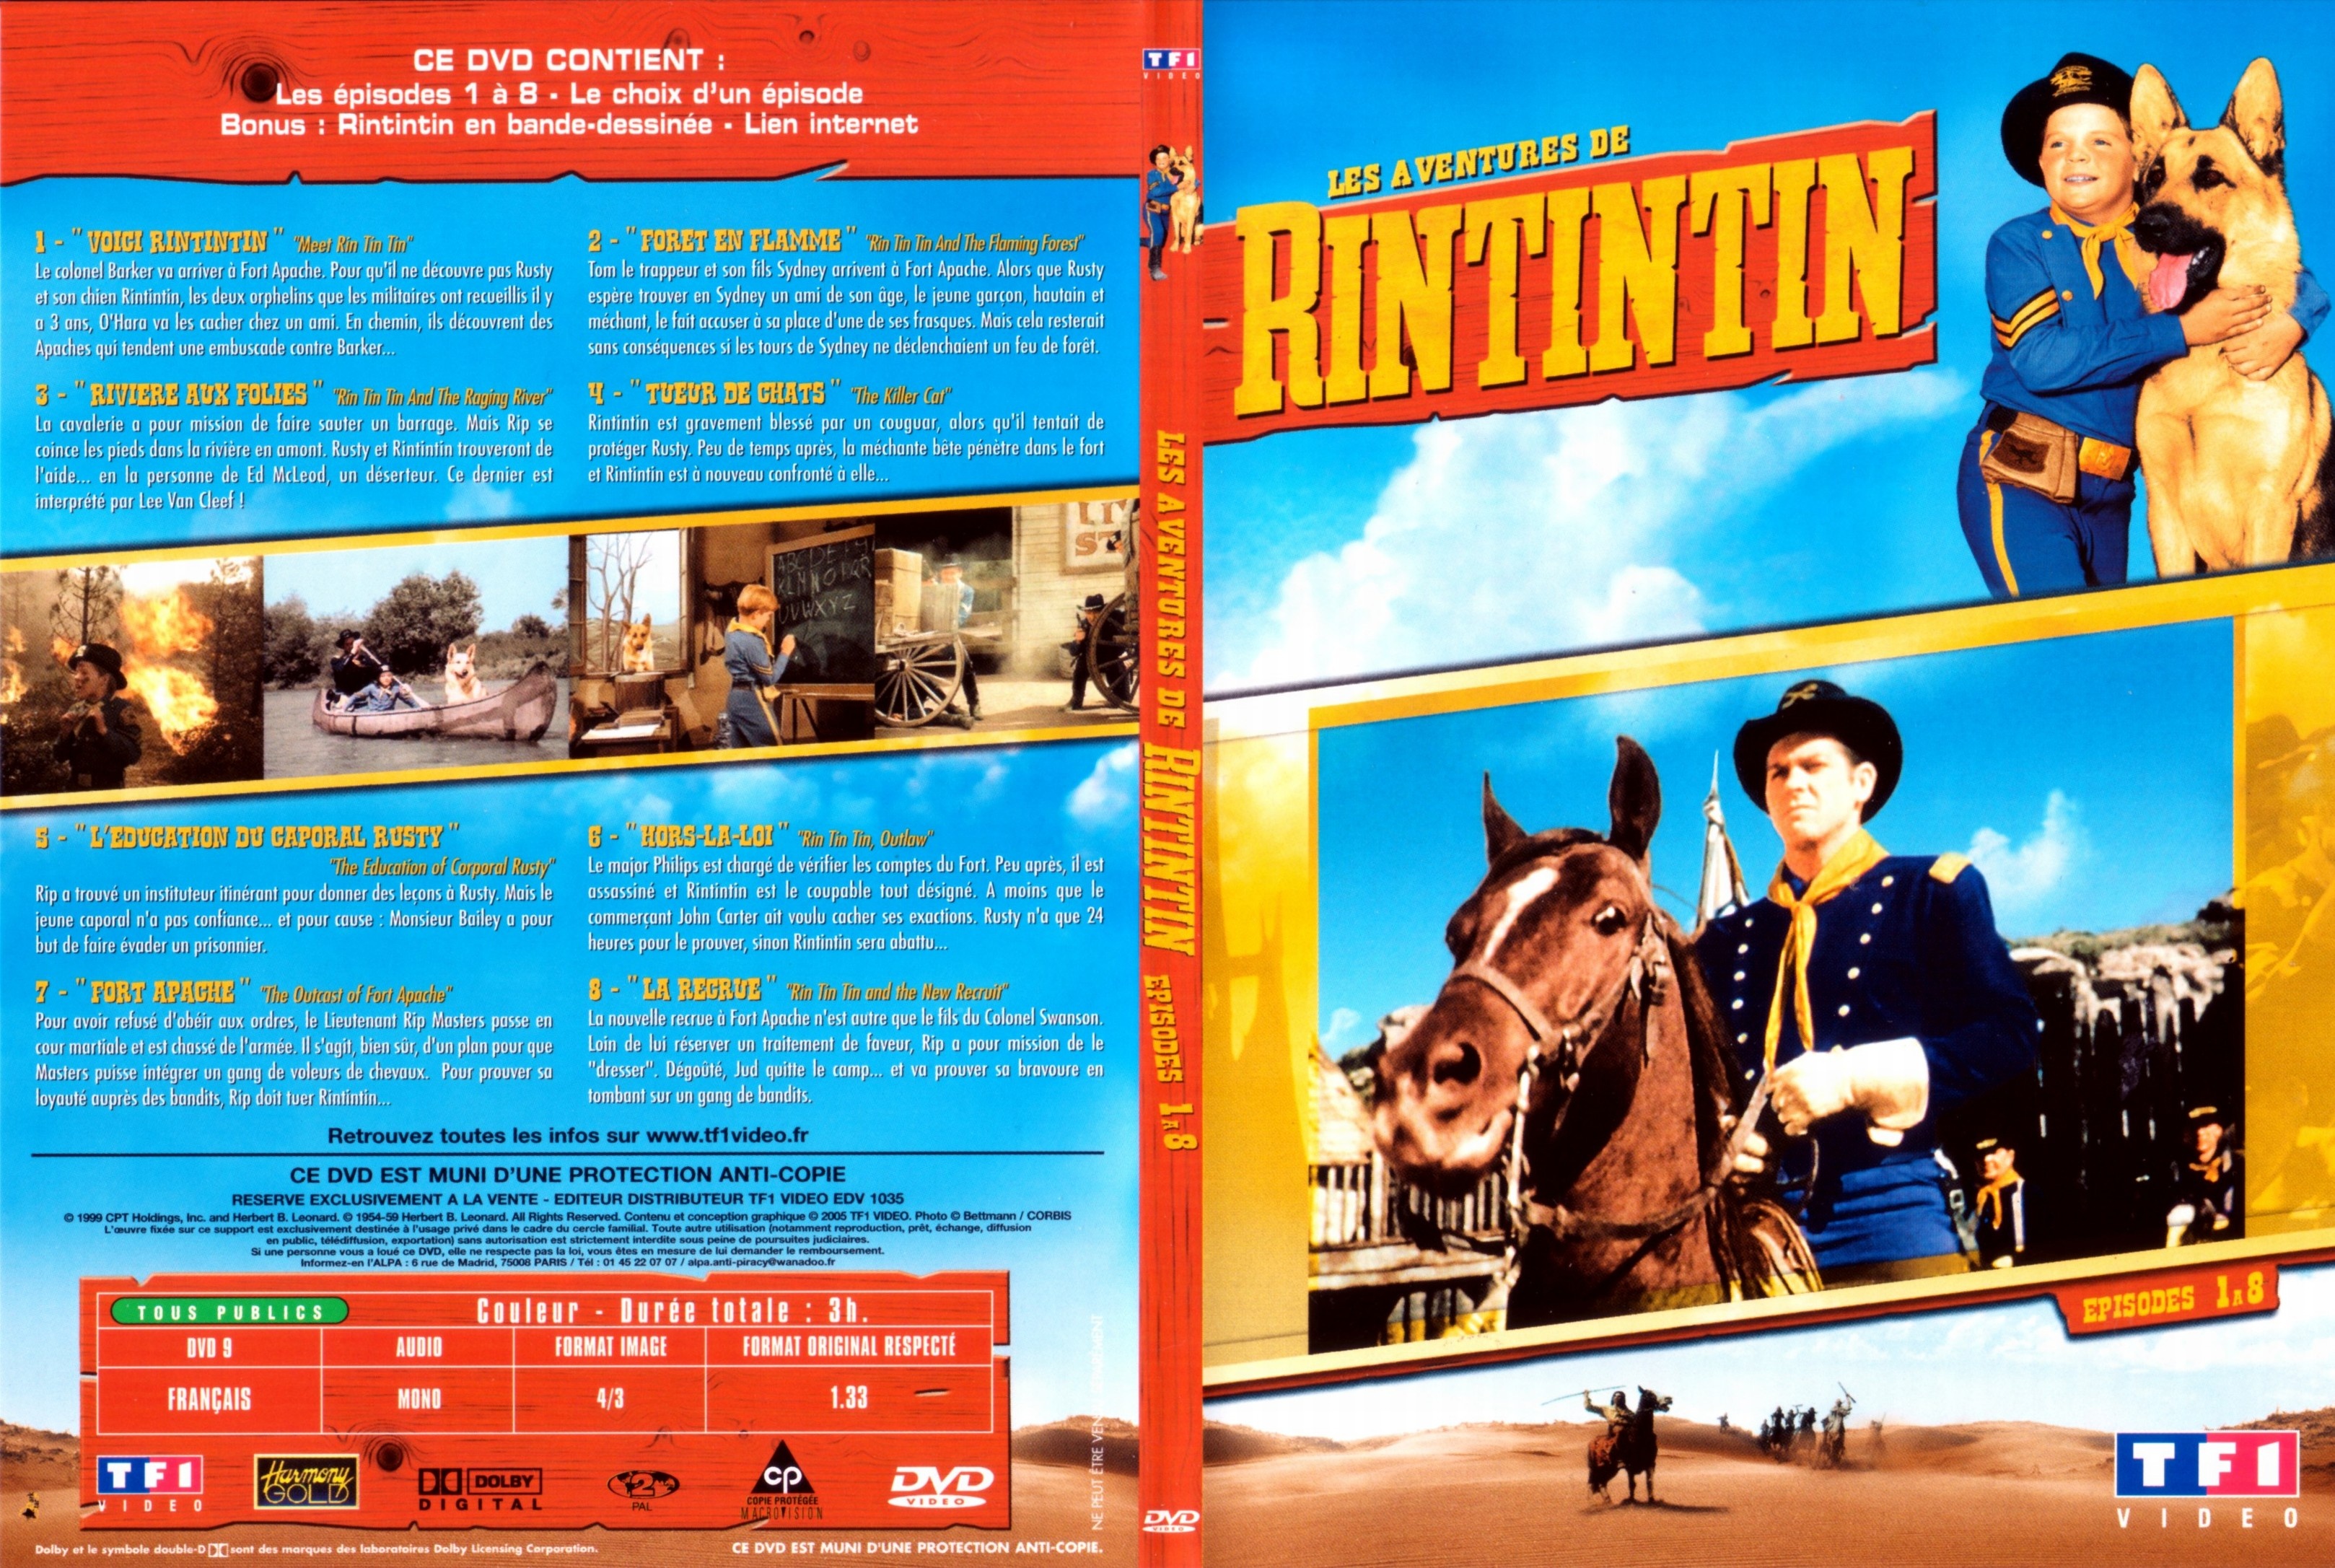 Jaquette DVD Les aventures de Rintintin vol 1 DVD 1